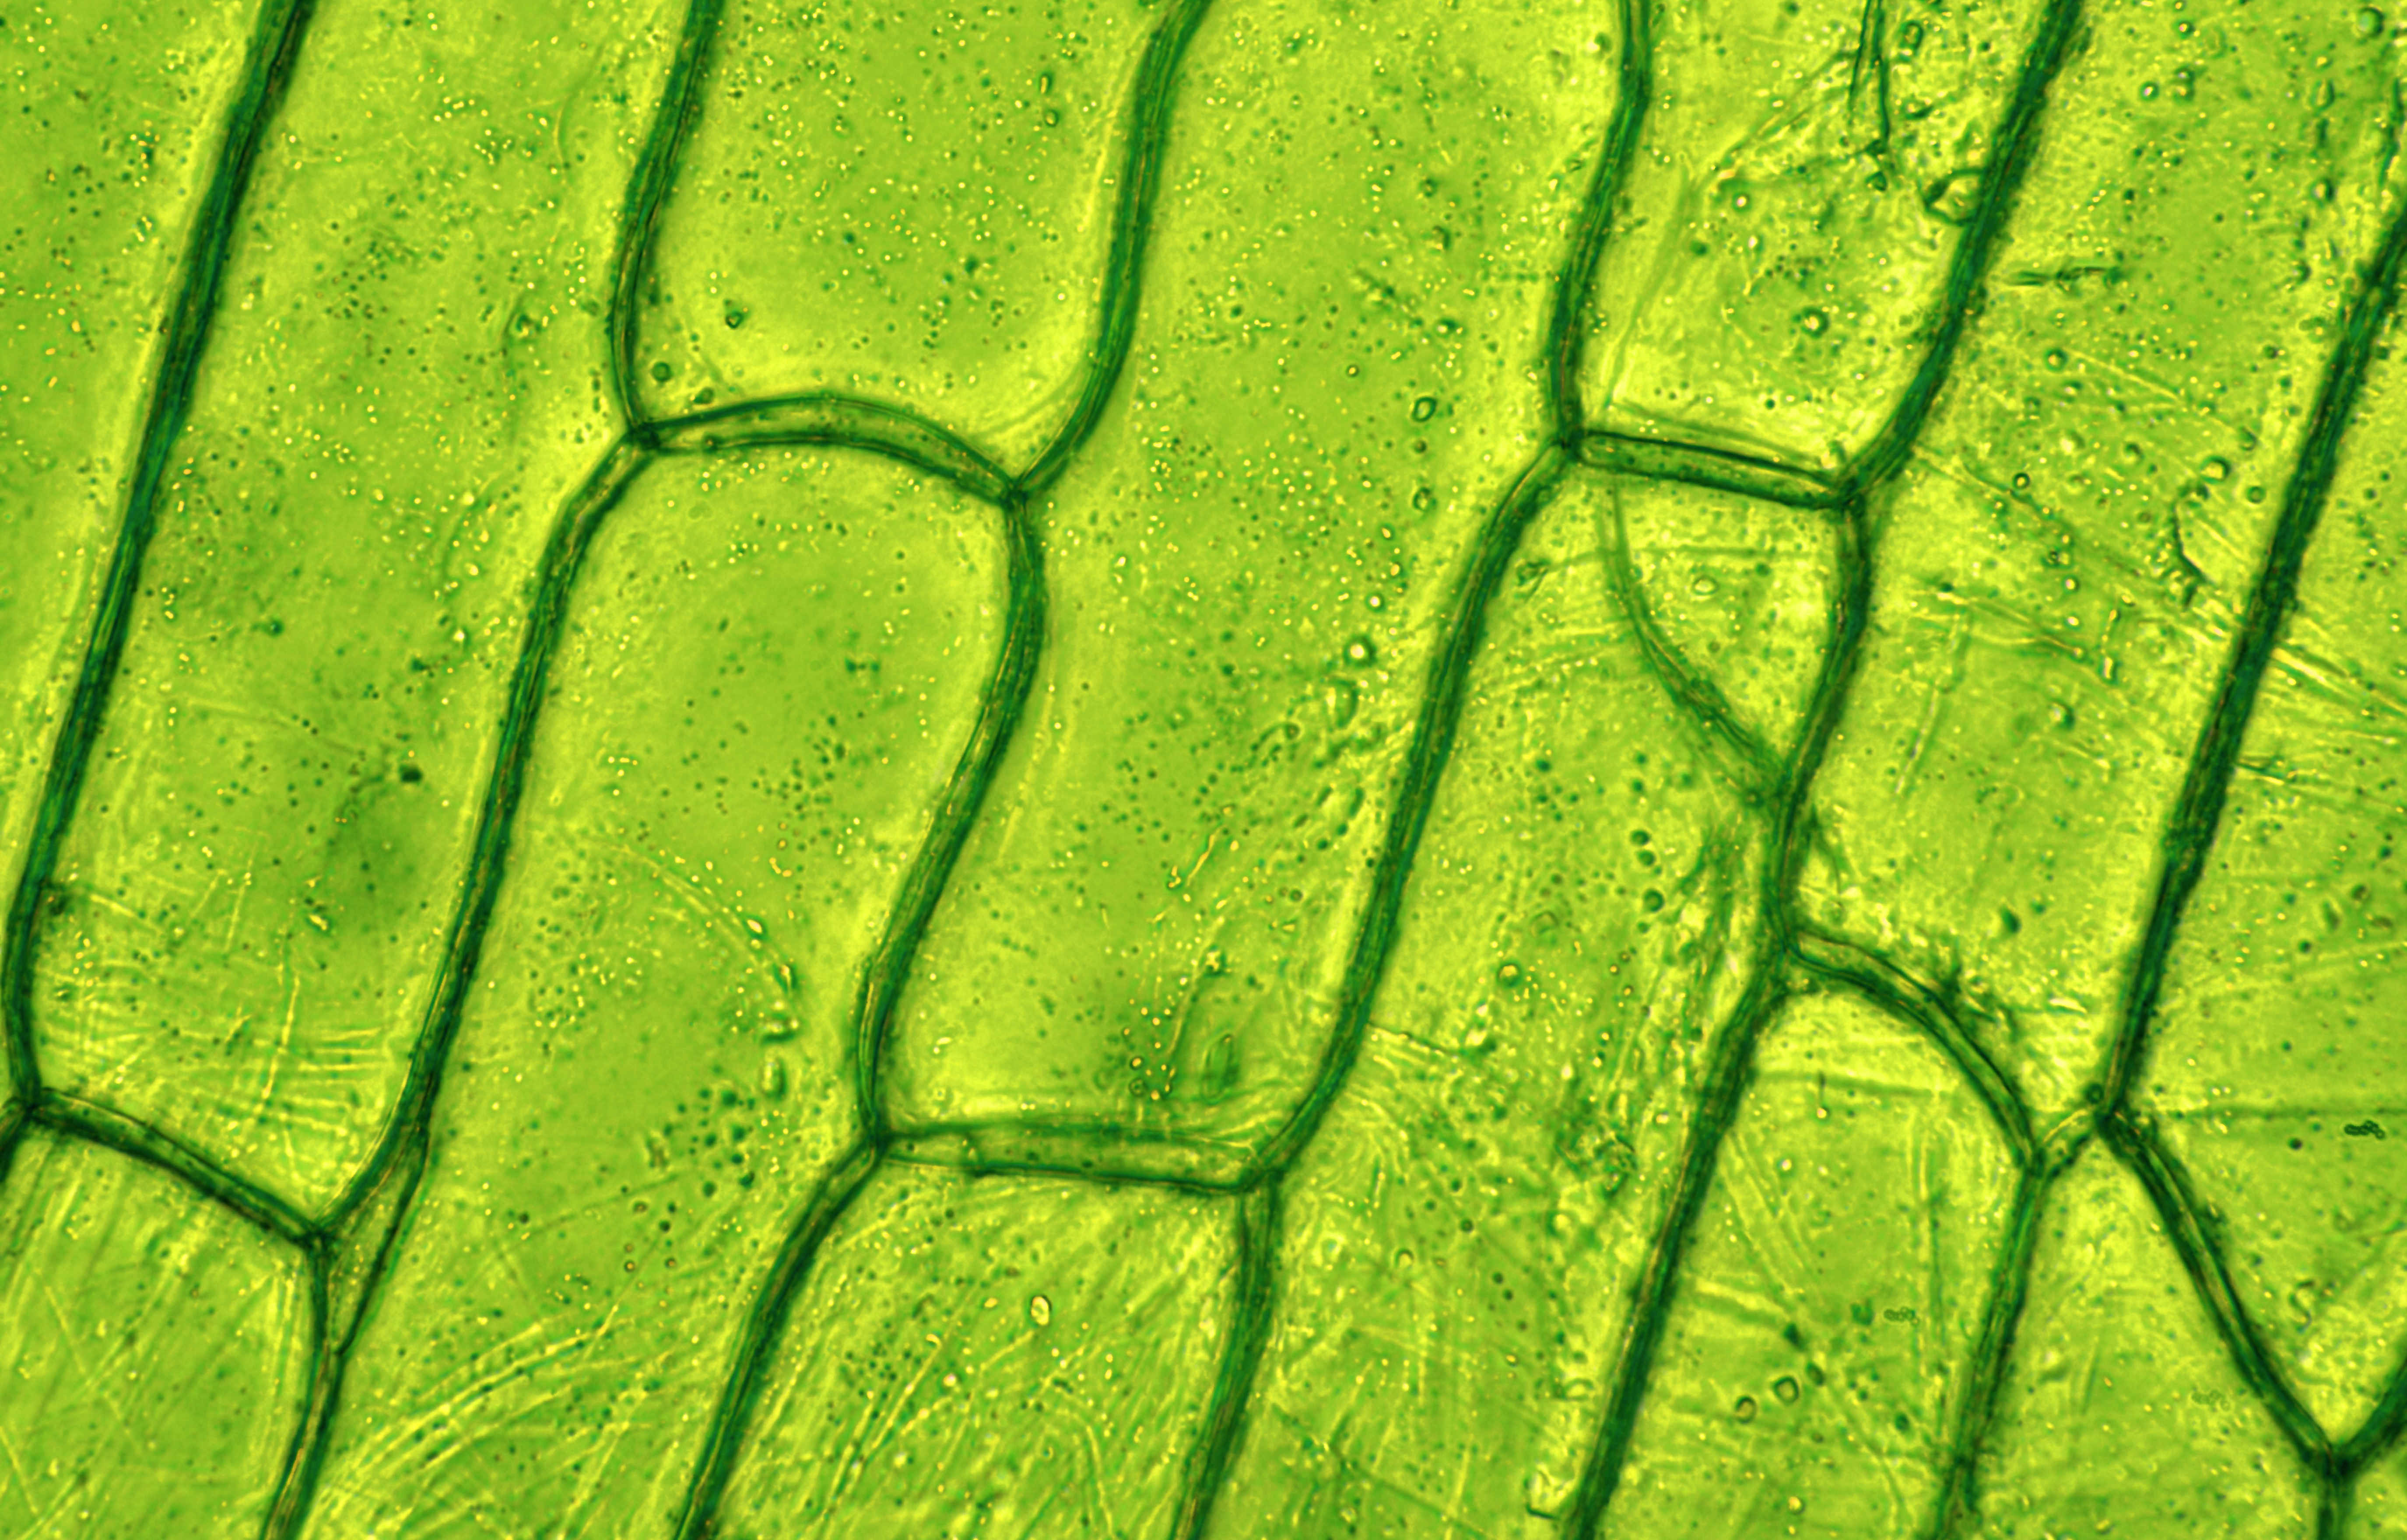 Plant cells under microscope. Shutterstock. 